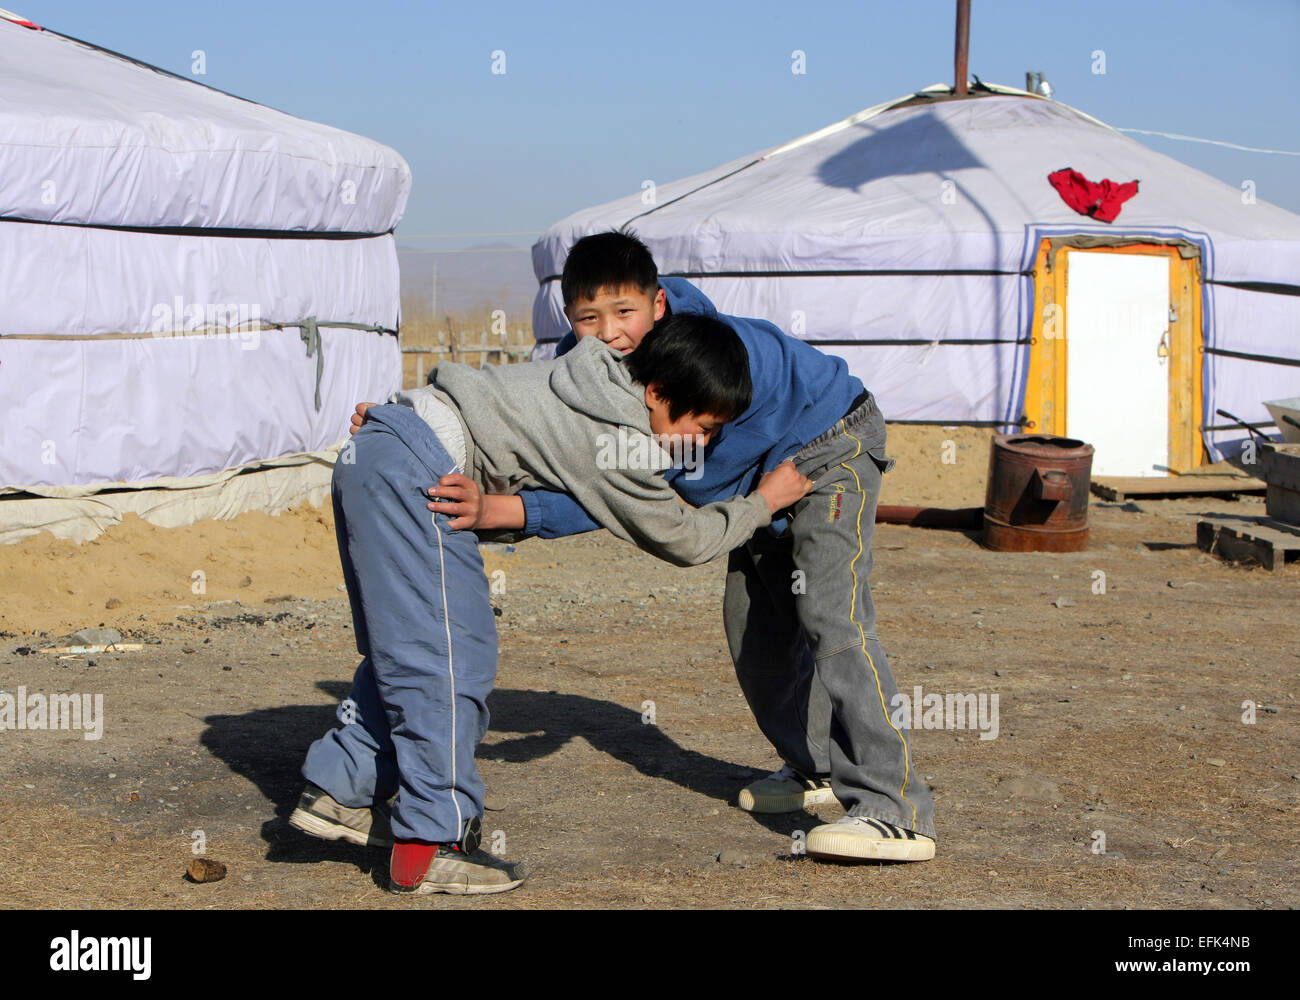 Kinder Praxis Ringen vor der traditionellen mongolischen Zelten (Ger), Mongolei Stockfoto